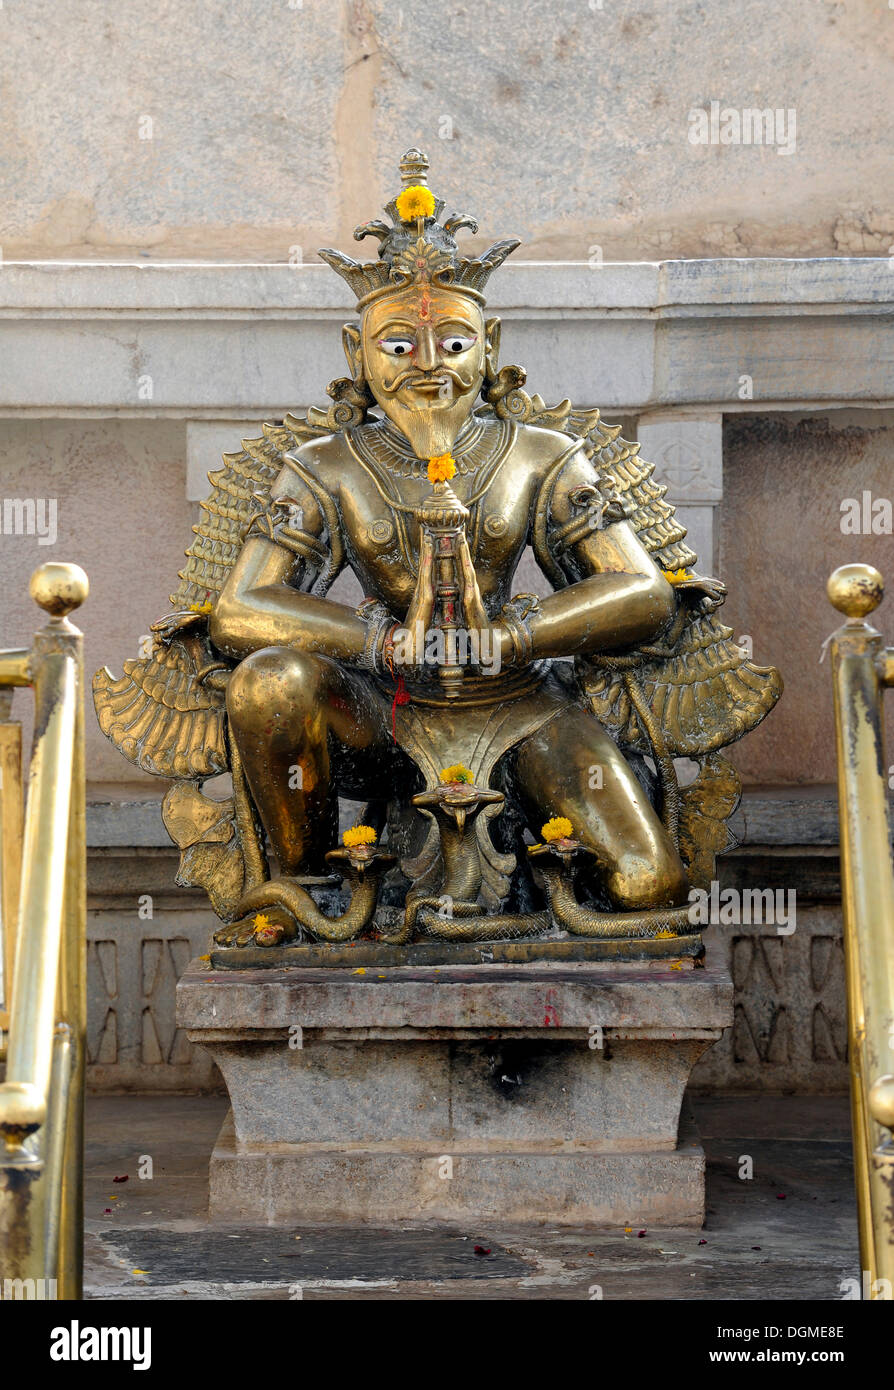 Statue of the Hindu deity Vishnu, Jagdish Temple, Udaipur, Rajasthan, North India, India, South Asia, Asia Stock Photo